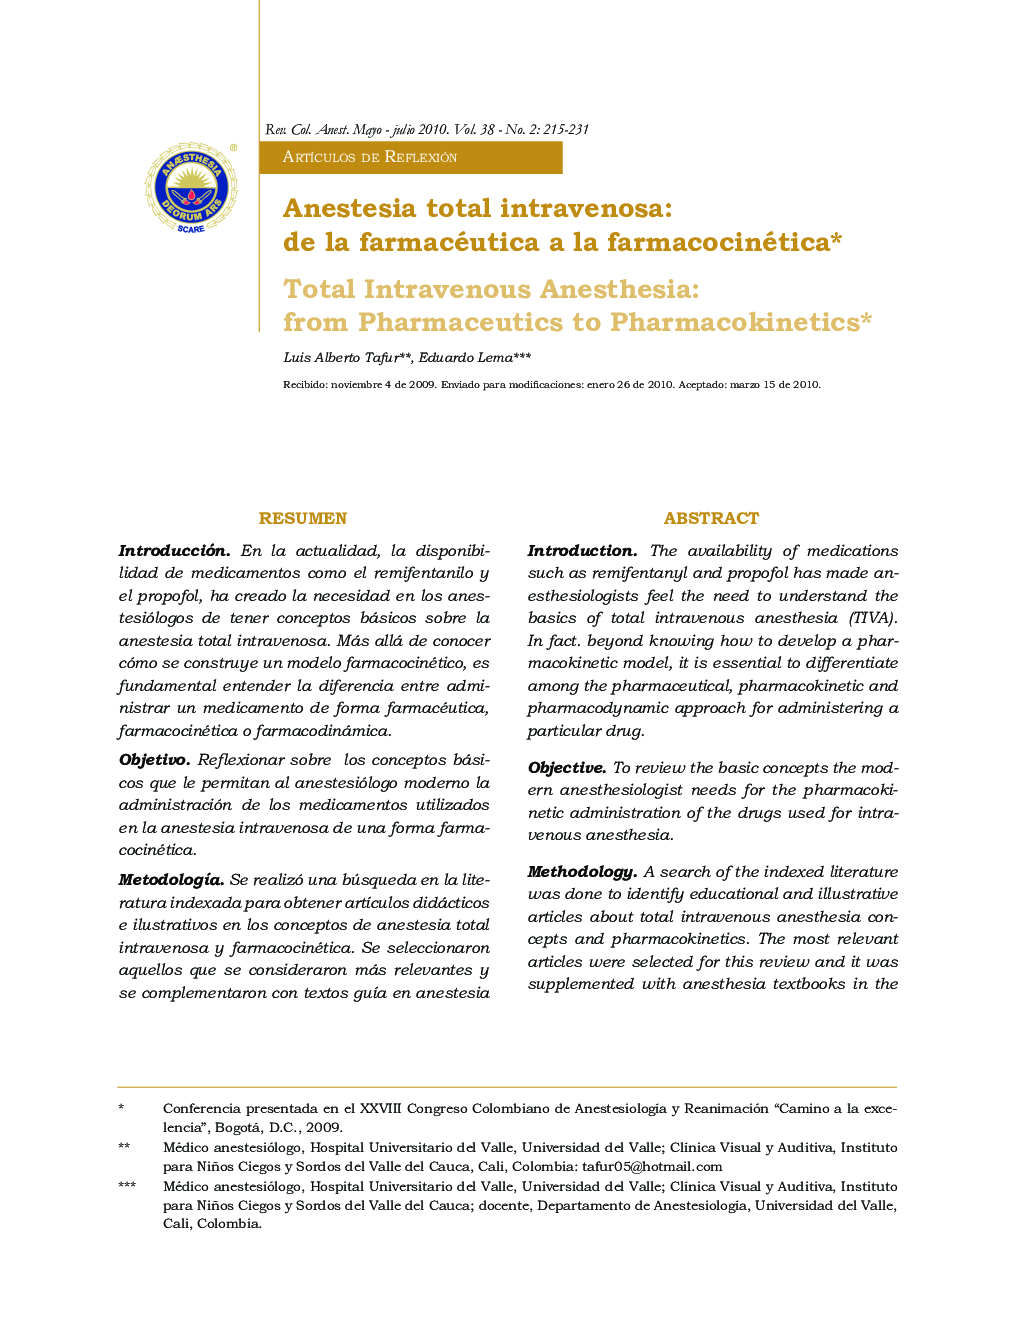 Anestesia total intravenosa: de la farmacéutica a la farmacocinética*